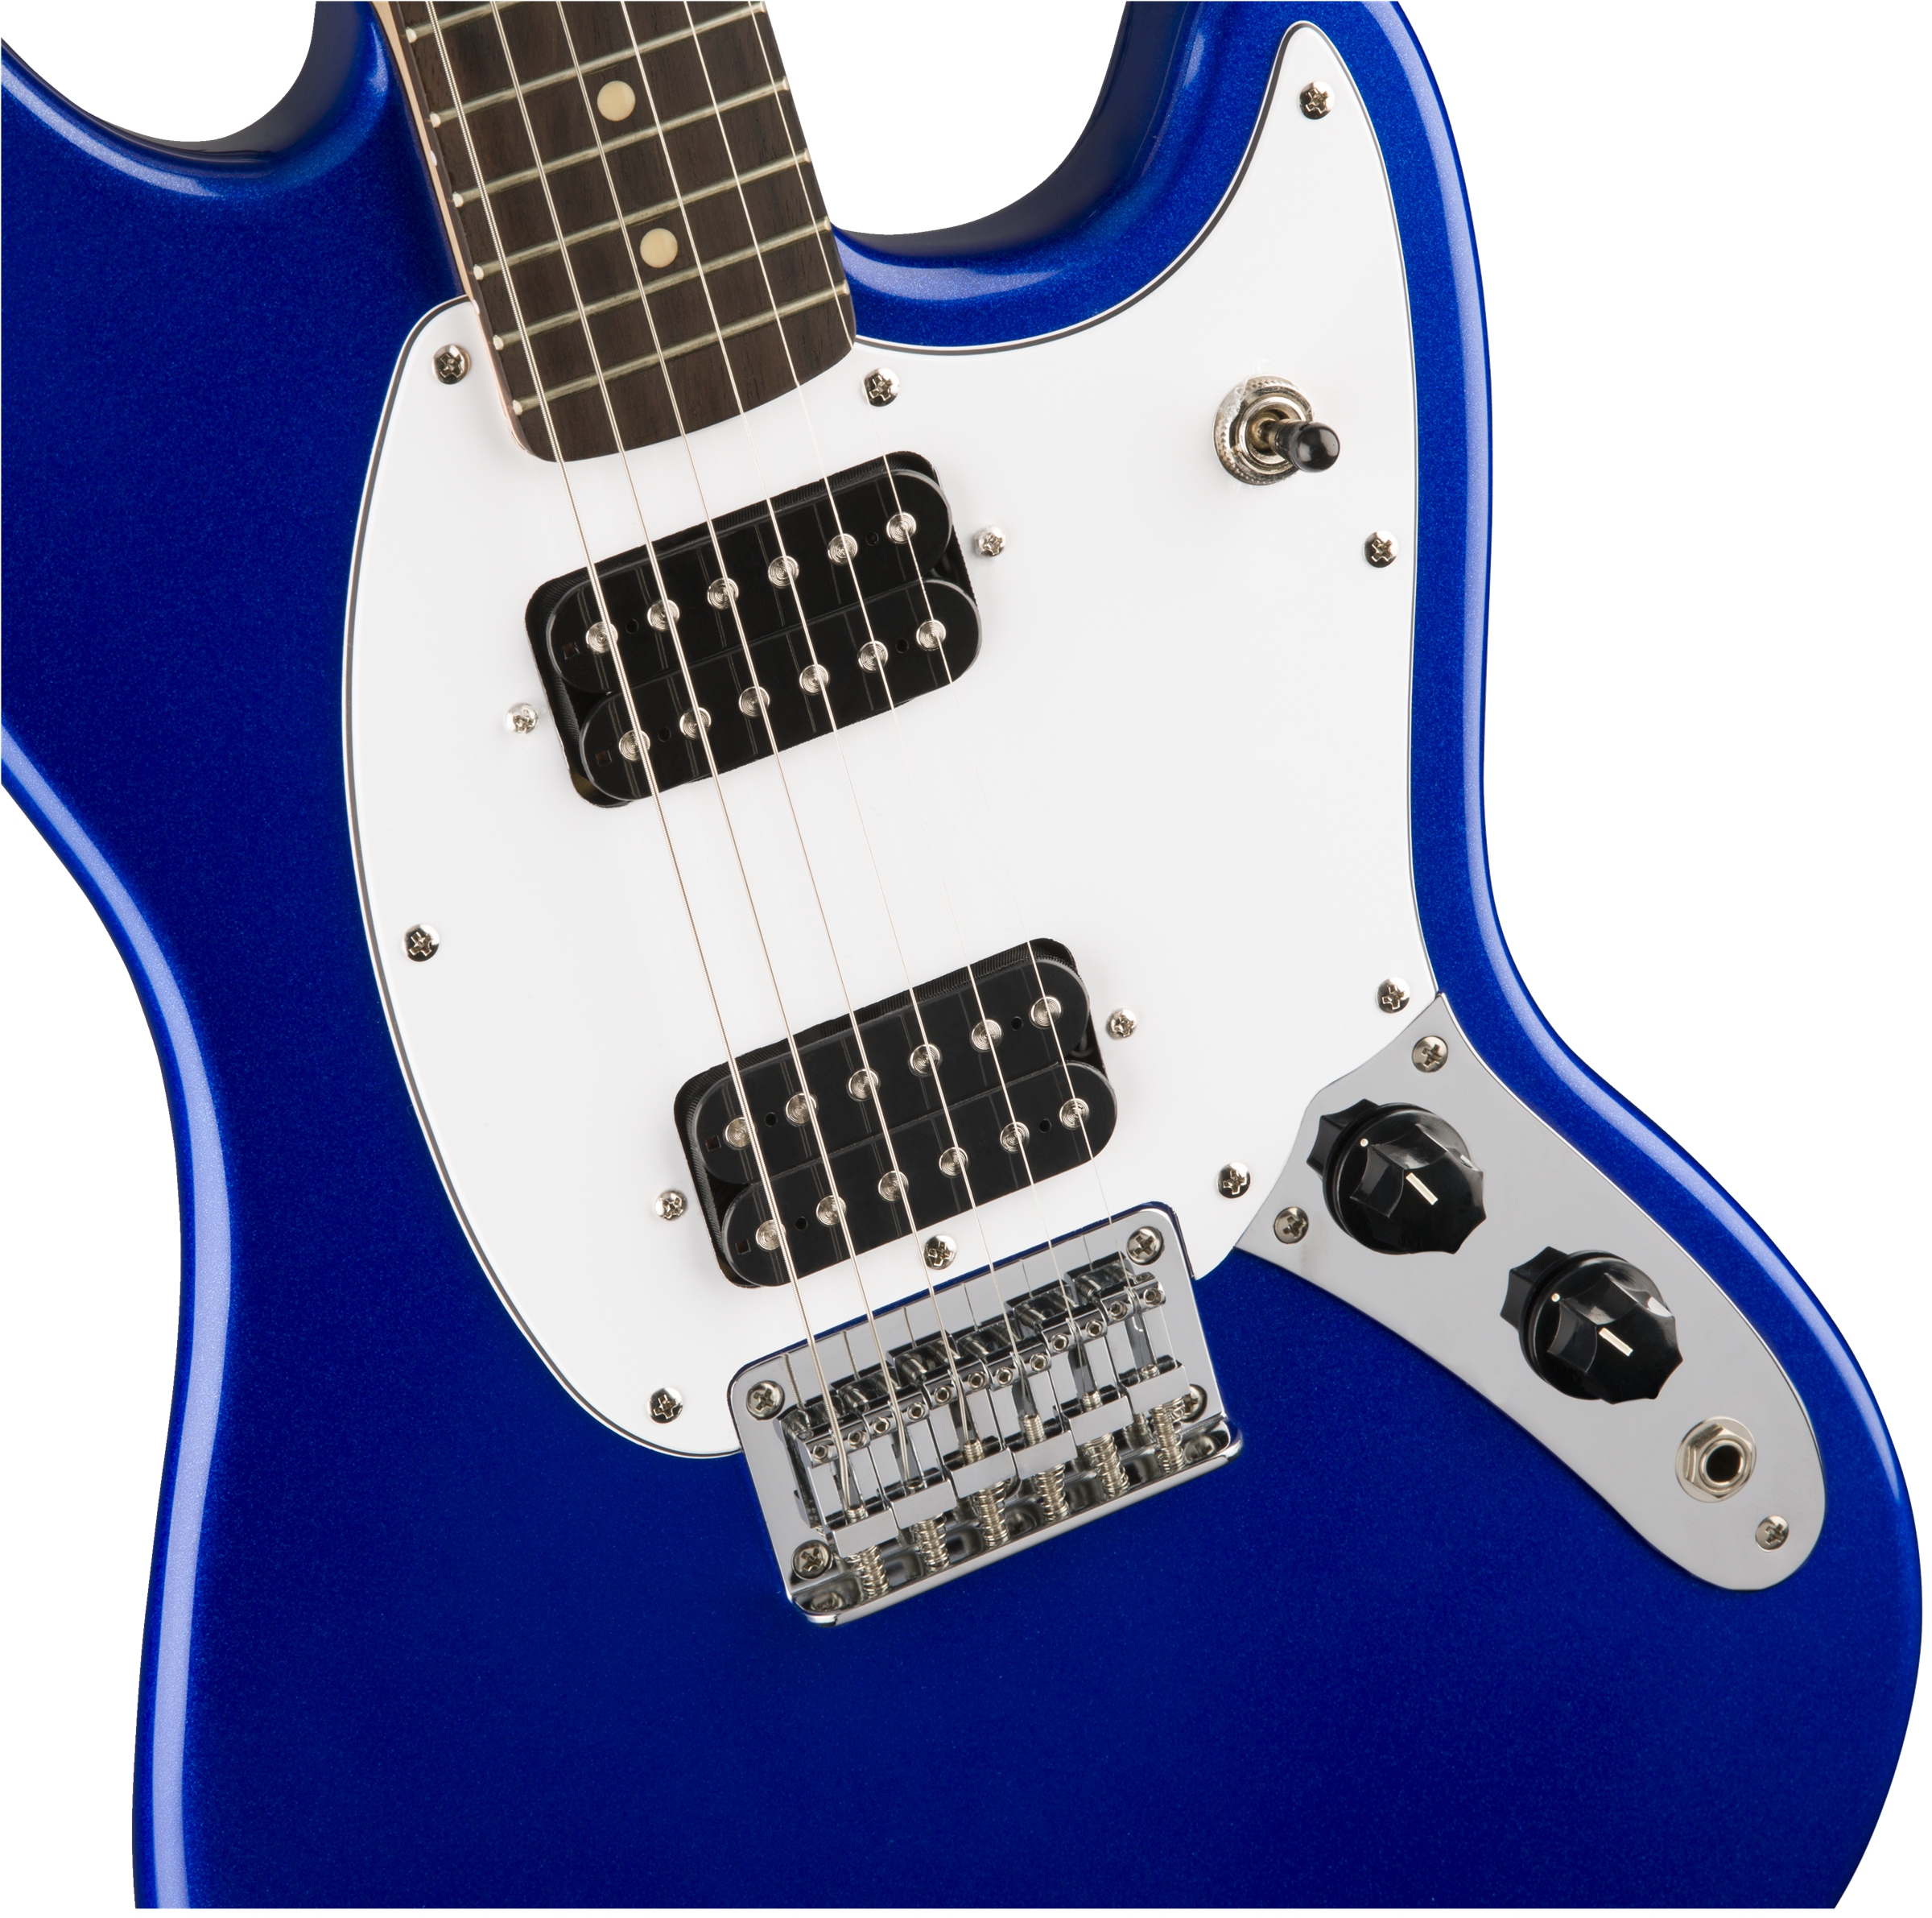 Squier Mustang Bullet Hh 2019 Ht Lau - Imperial Blue - Guitarra electrica retro rock - Variation 2